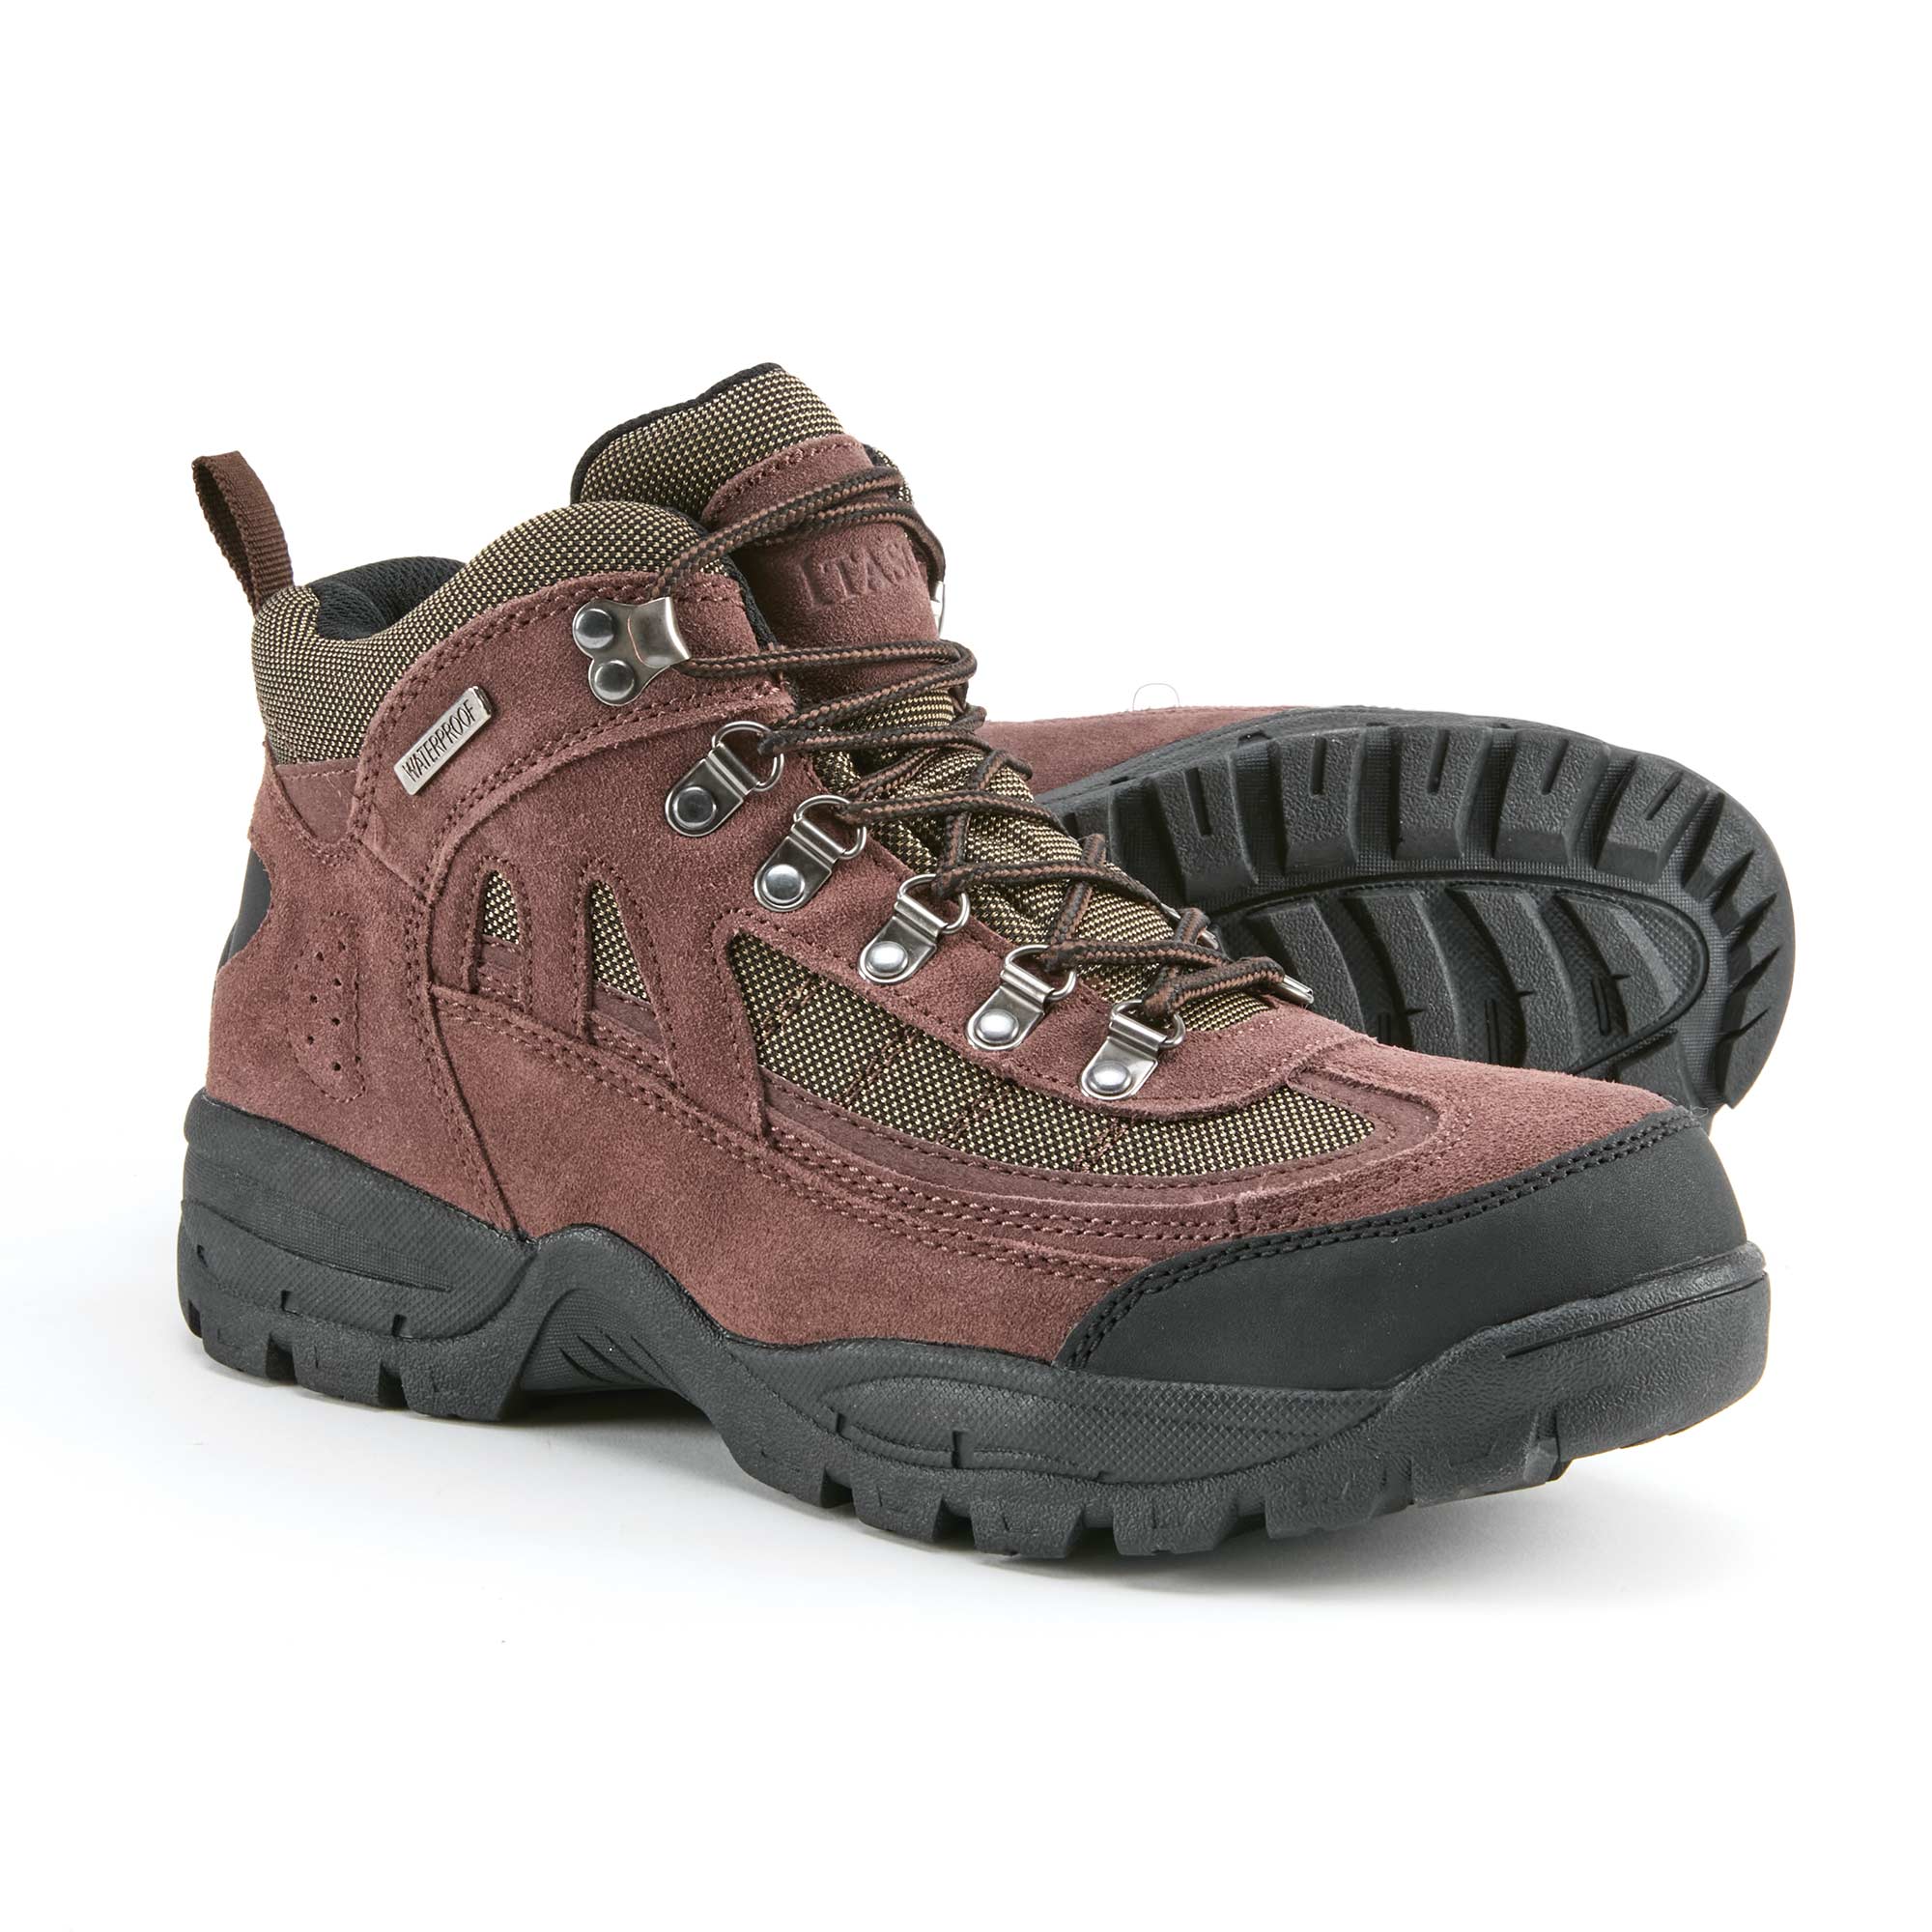 Itasca Men's Waterproof Hiking Boots